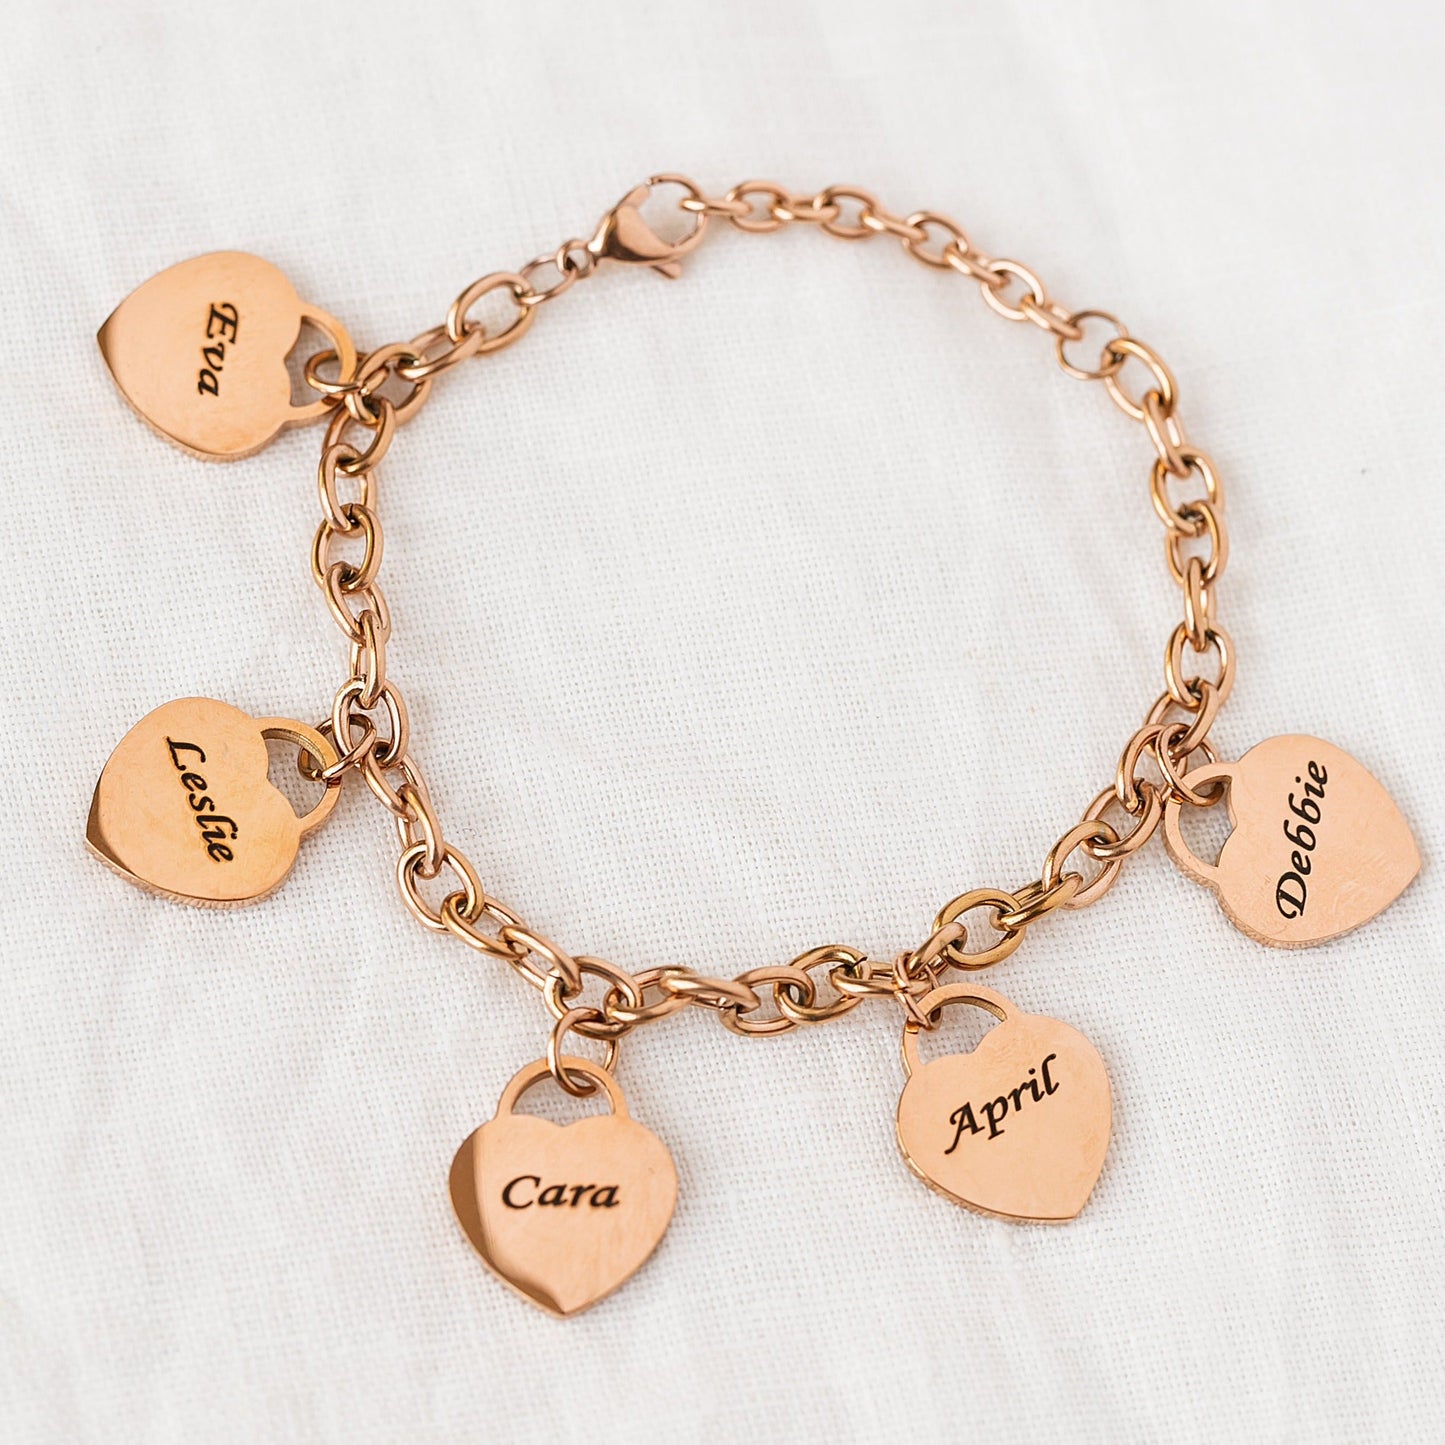 Personalized heart engraved bracelet